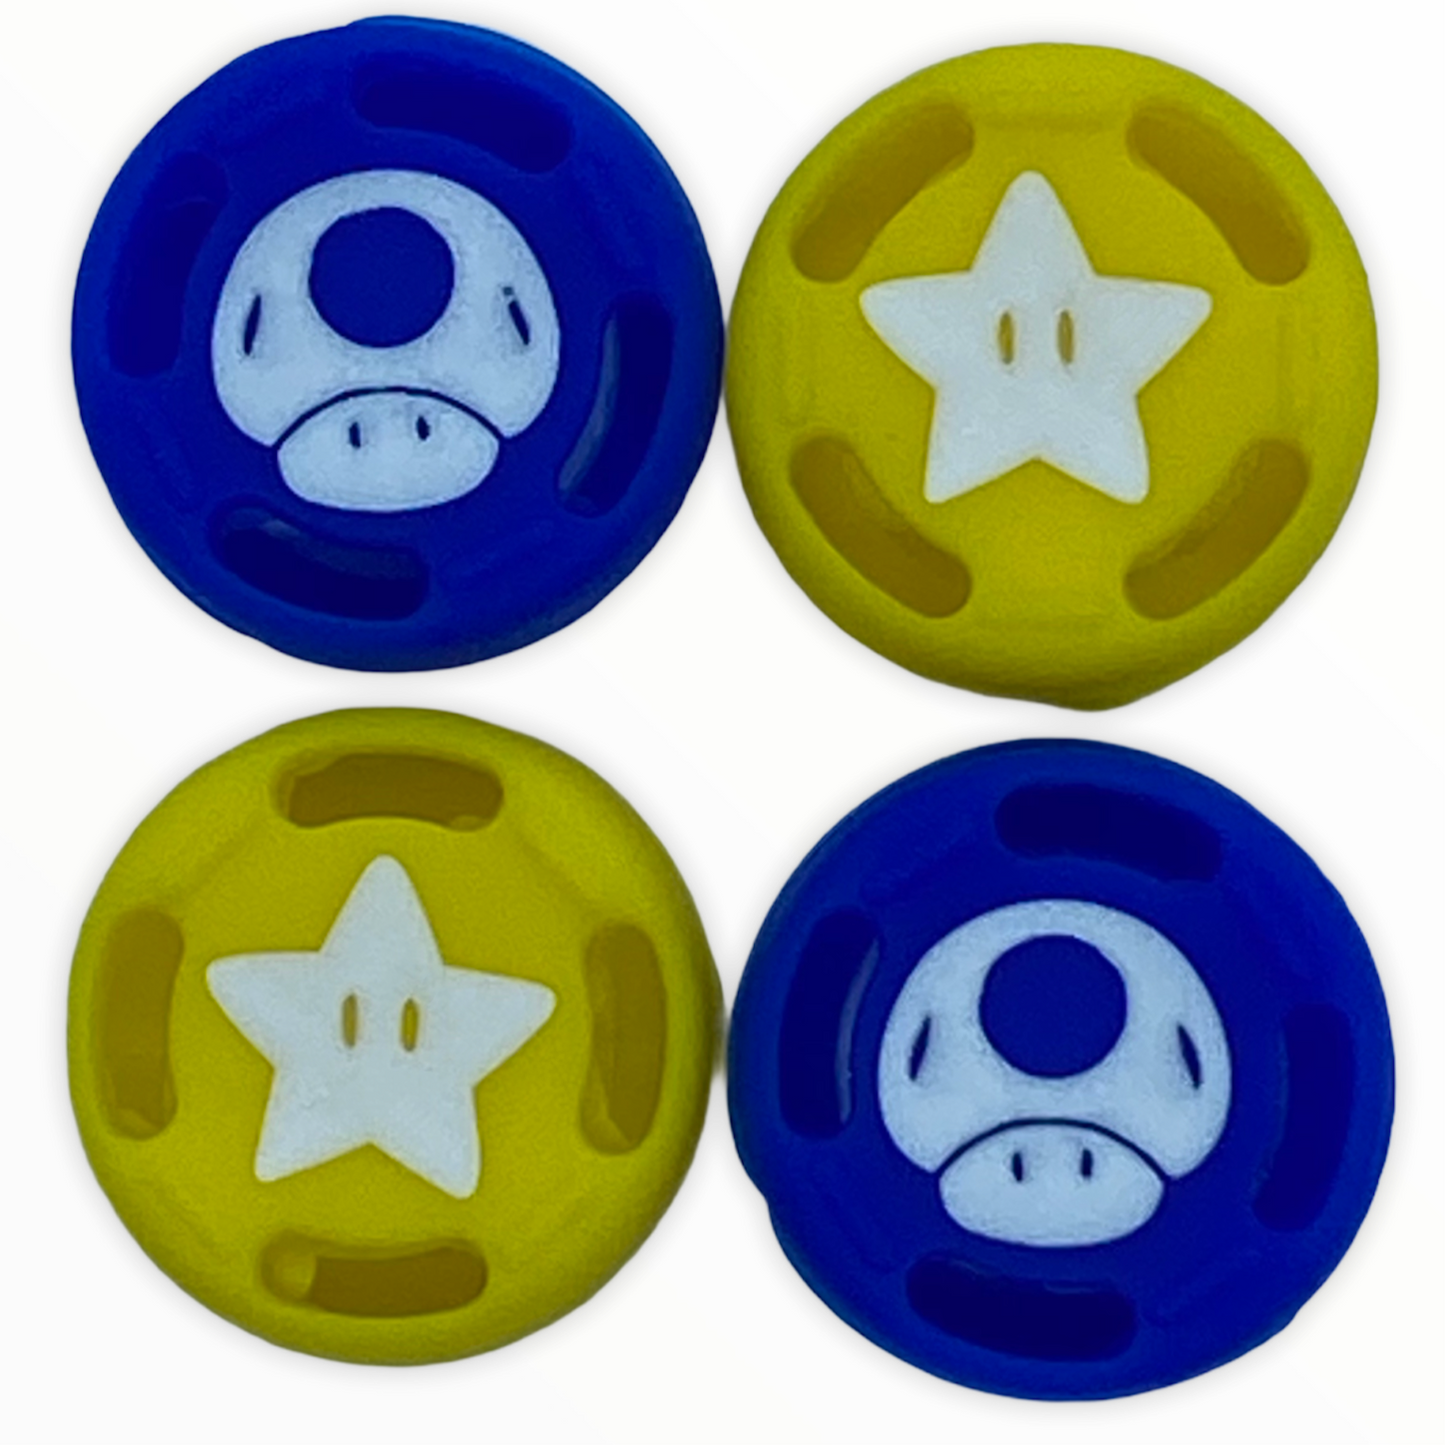 JenDore Blue Mushroom & Yellow Star 4Pcs Silicone Thumb Grip Caps for Nintendo Switch